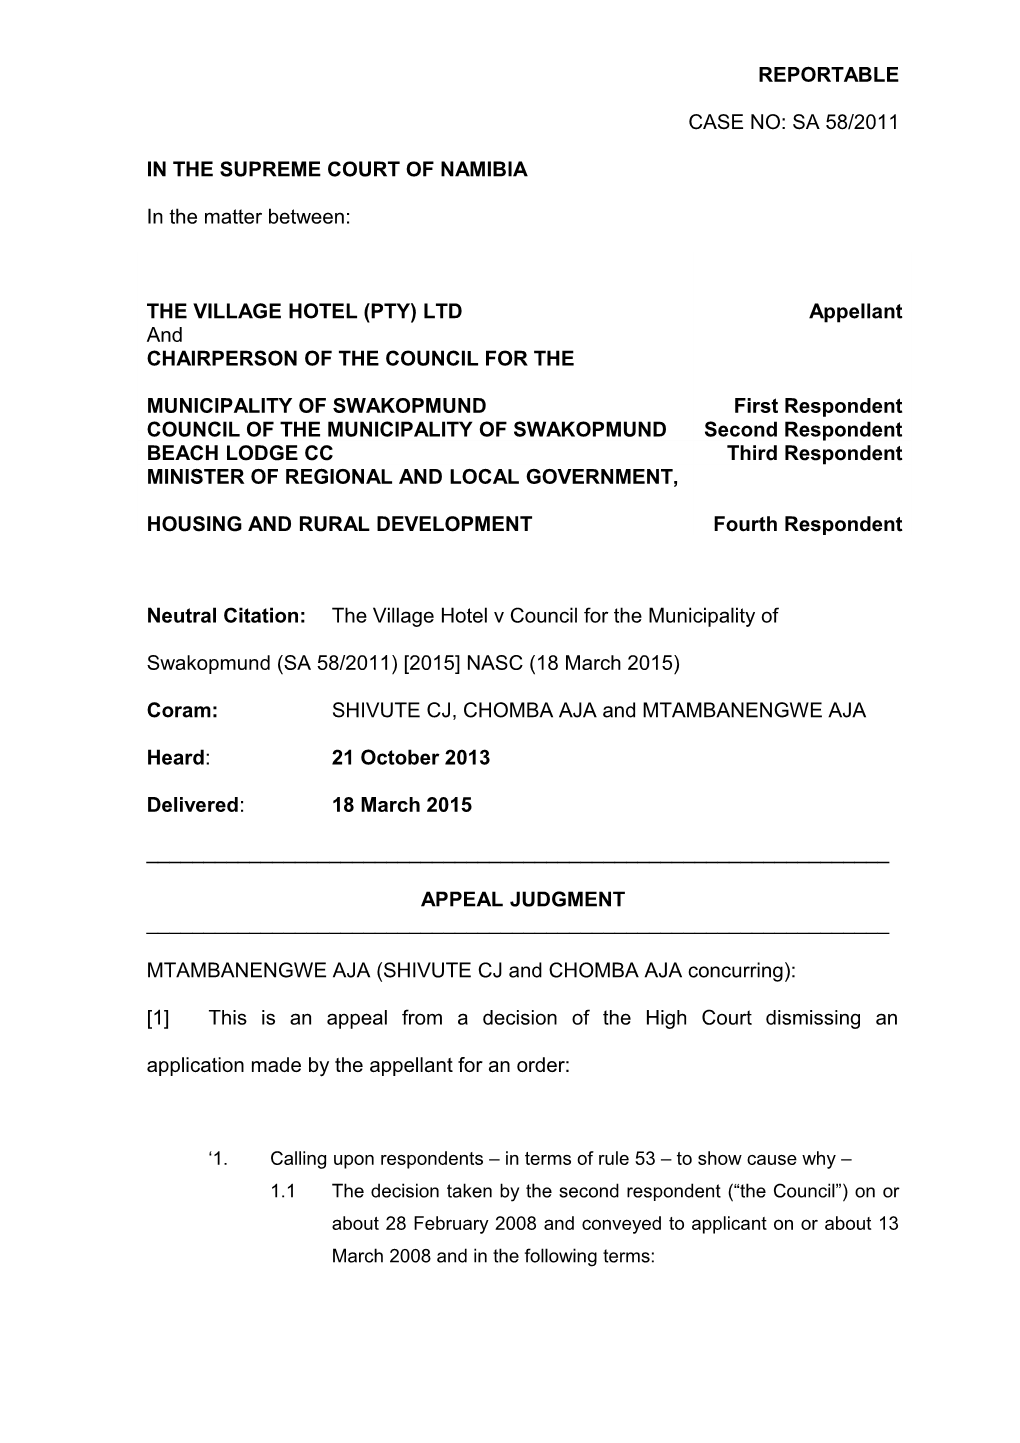 The Village Hotel V Council for the Municipality of Swakopmund (SA 58-2011) 2015 NASC (18